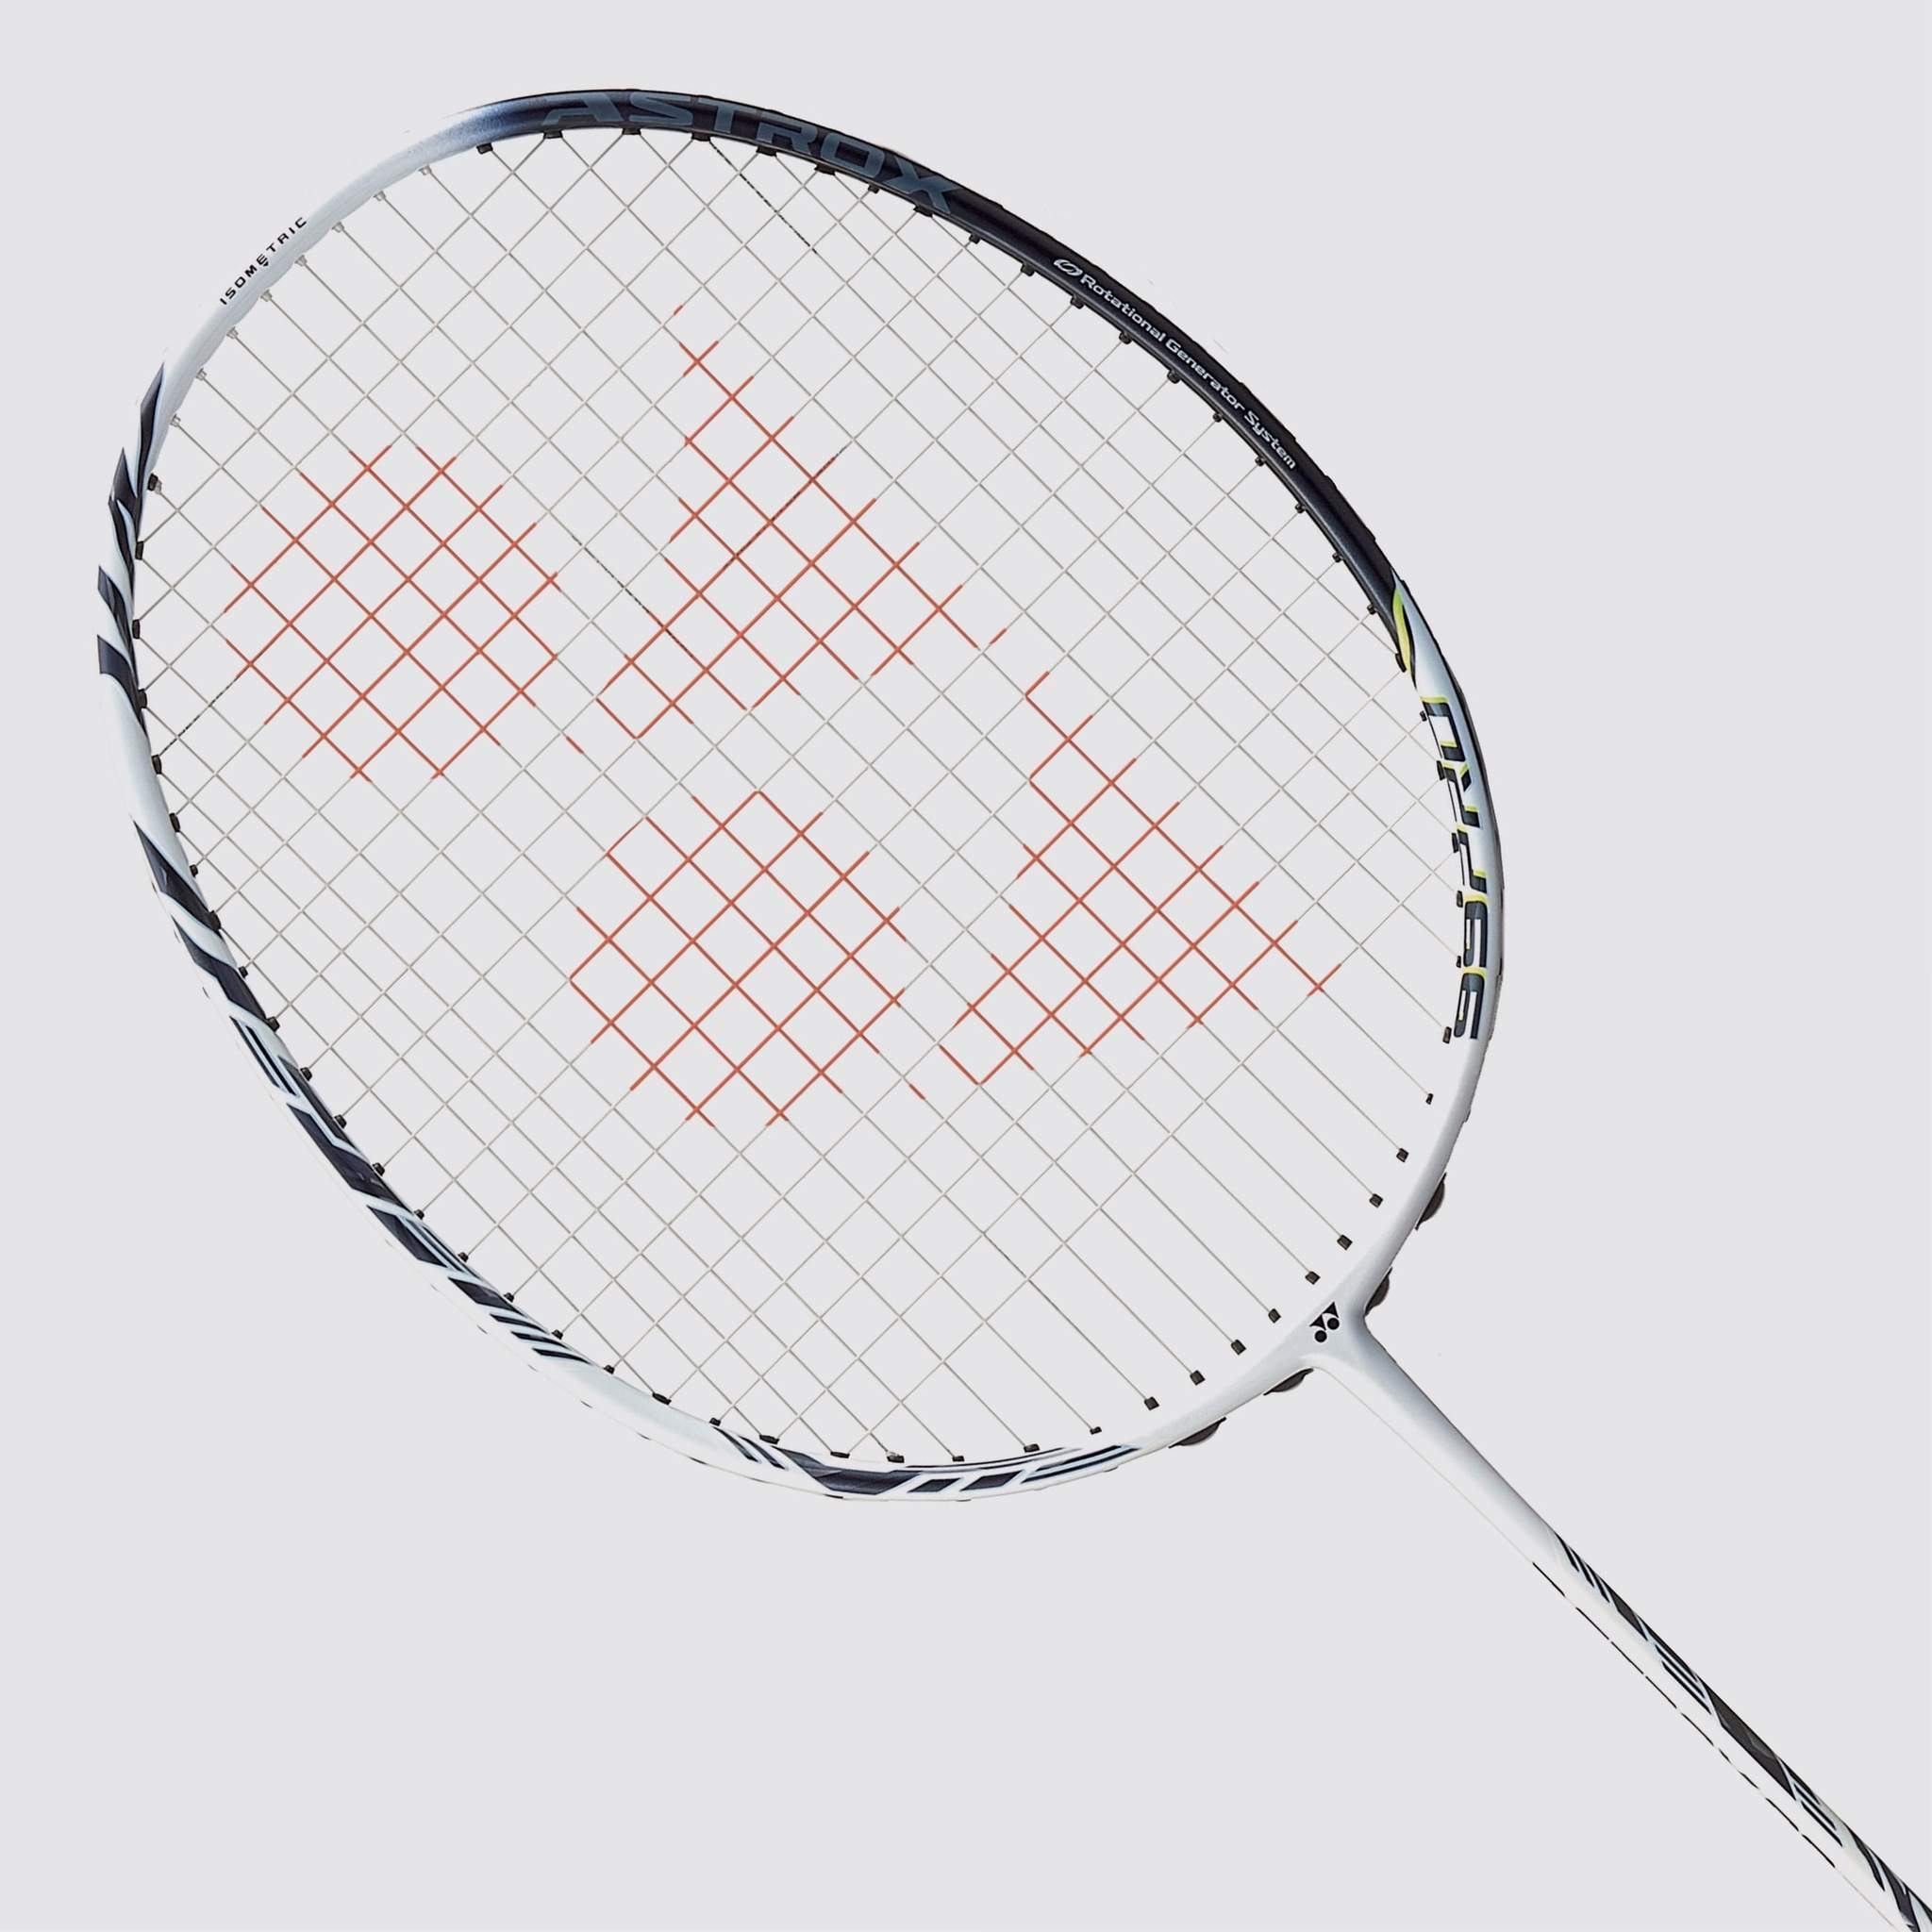 Yonex Astrox 99 Pro (White Tiger) Badminton Racket